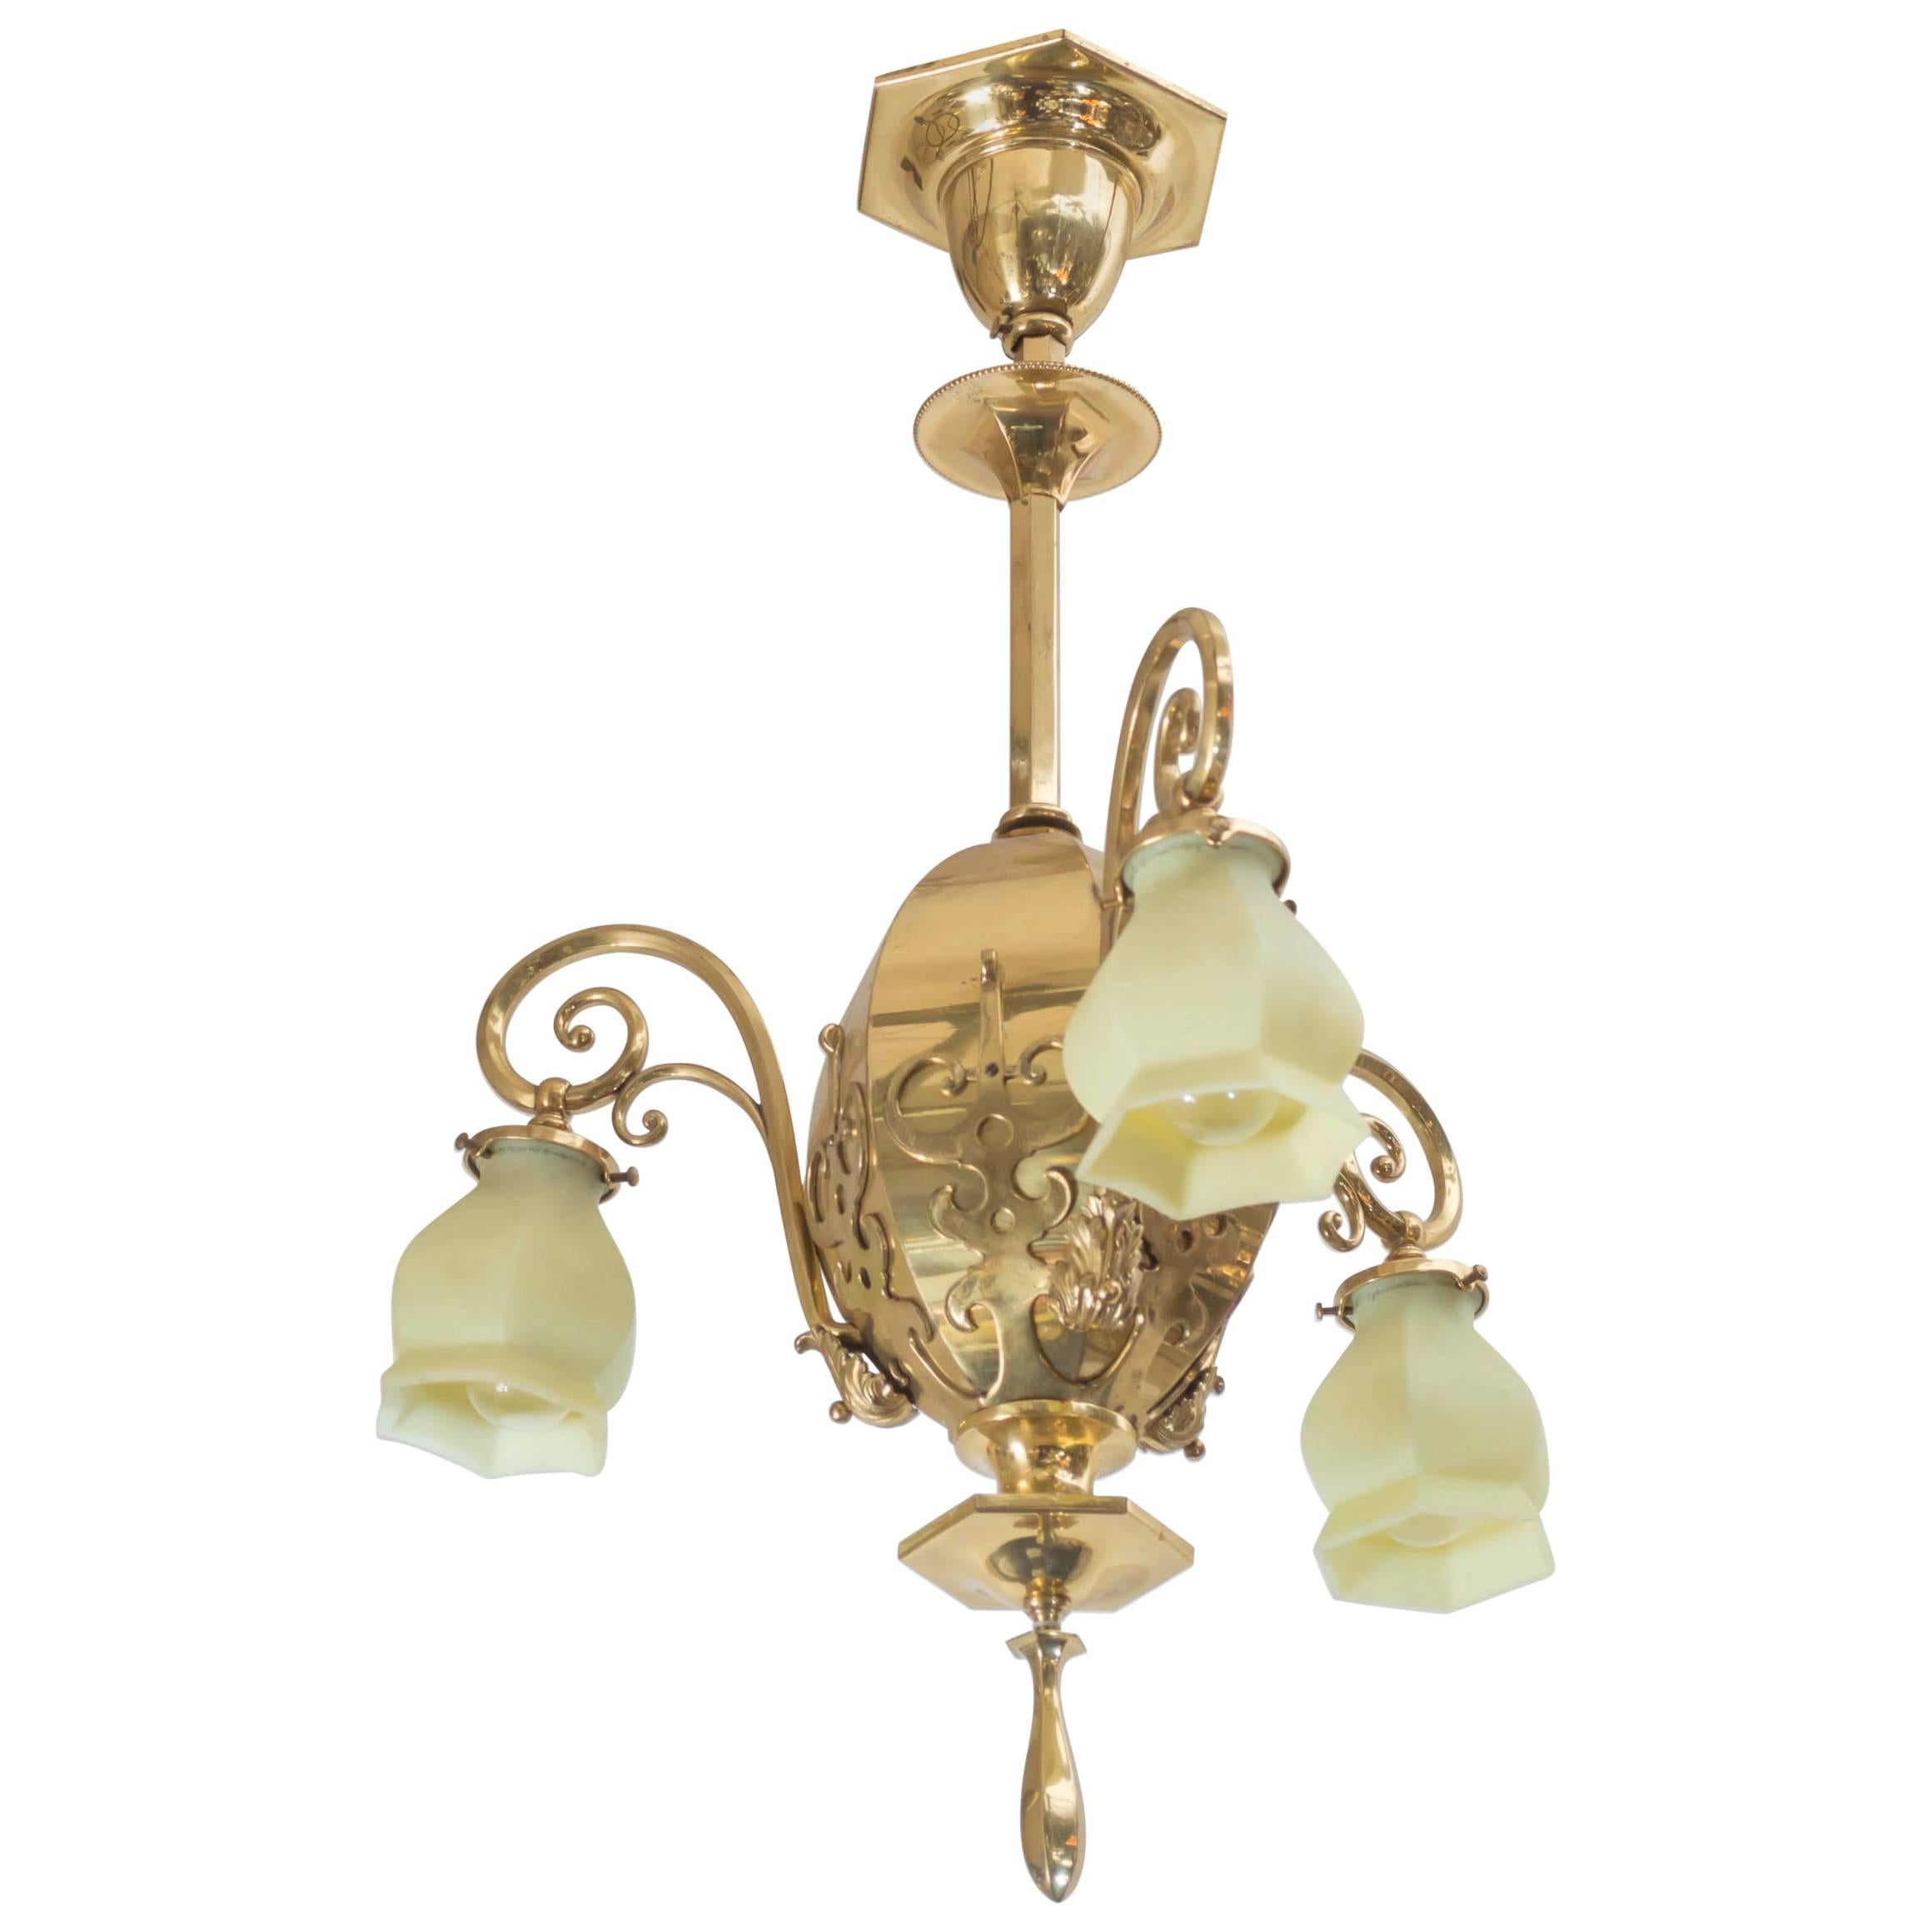 Late Victorian Three-Arm Chandelier with Original Vaseline Glass Shades